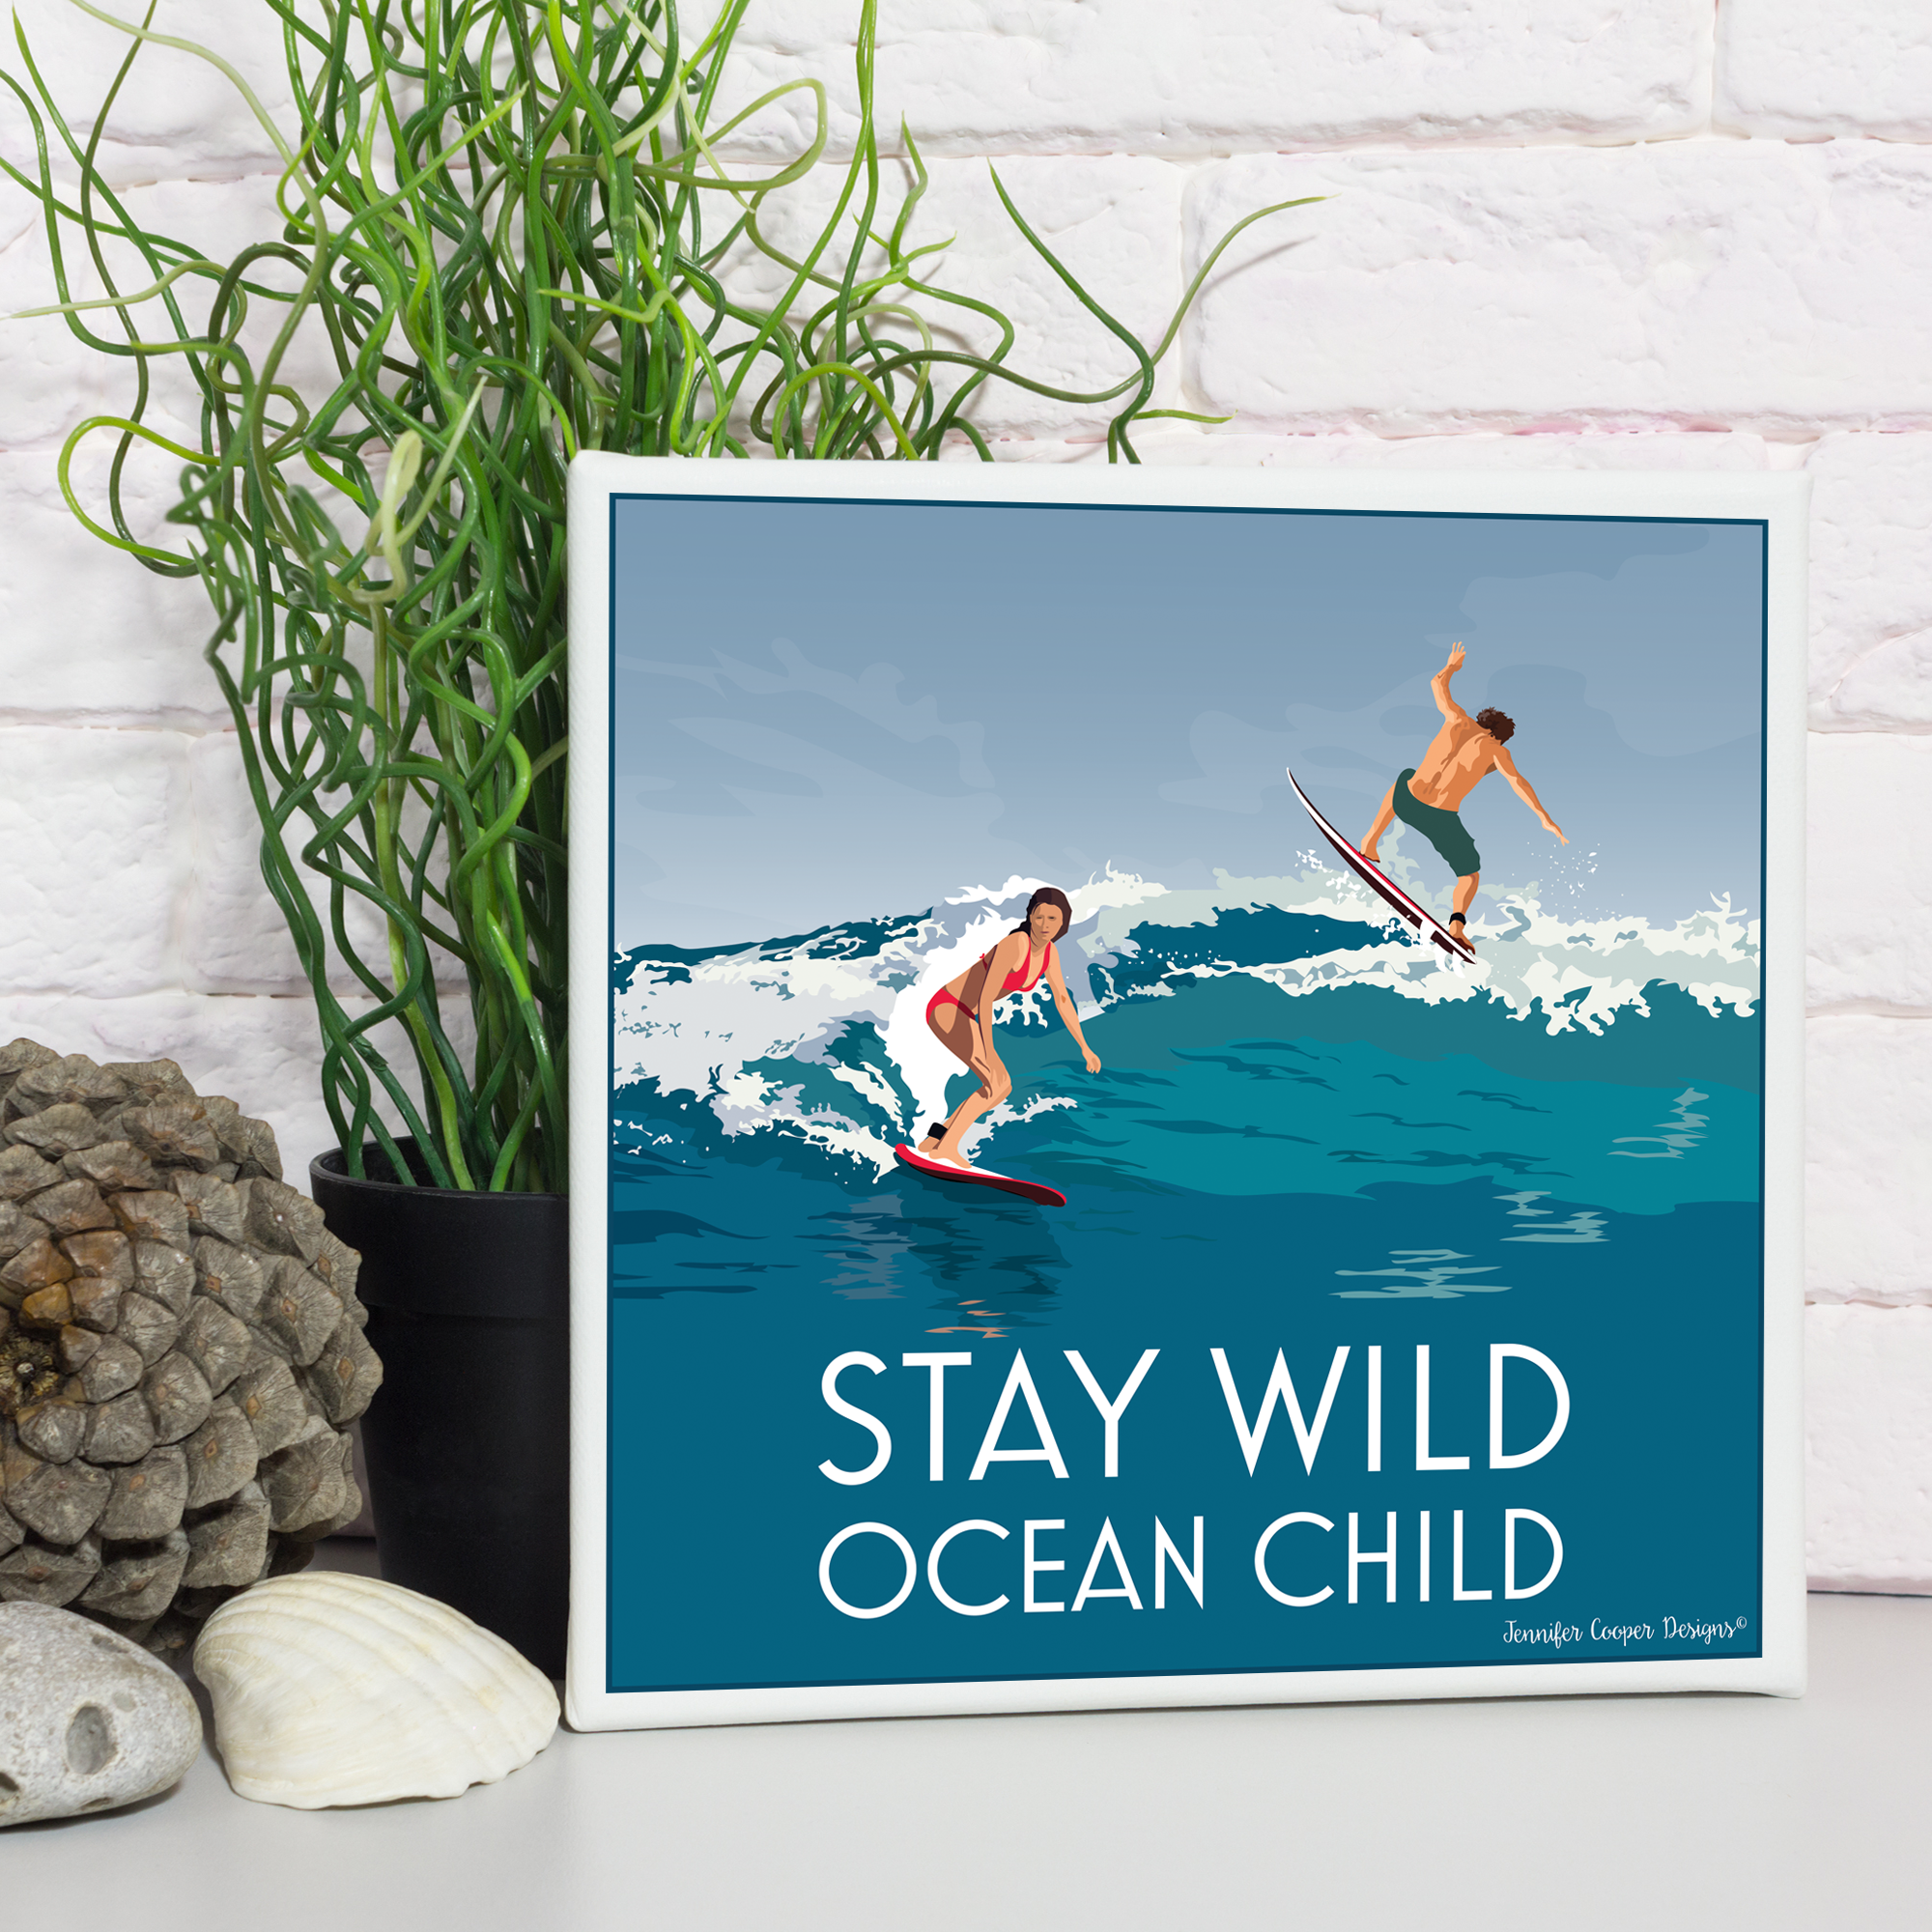 Stay Wild Ocean Child - Surfing Greeting Card